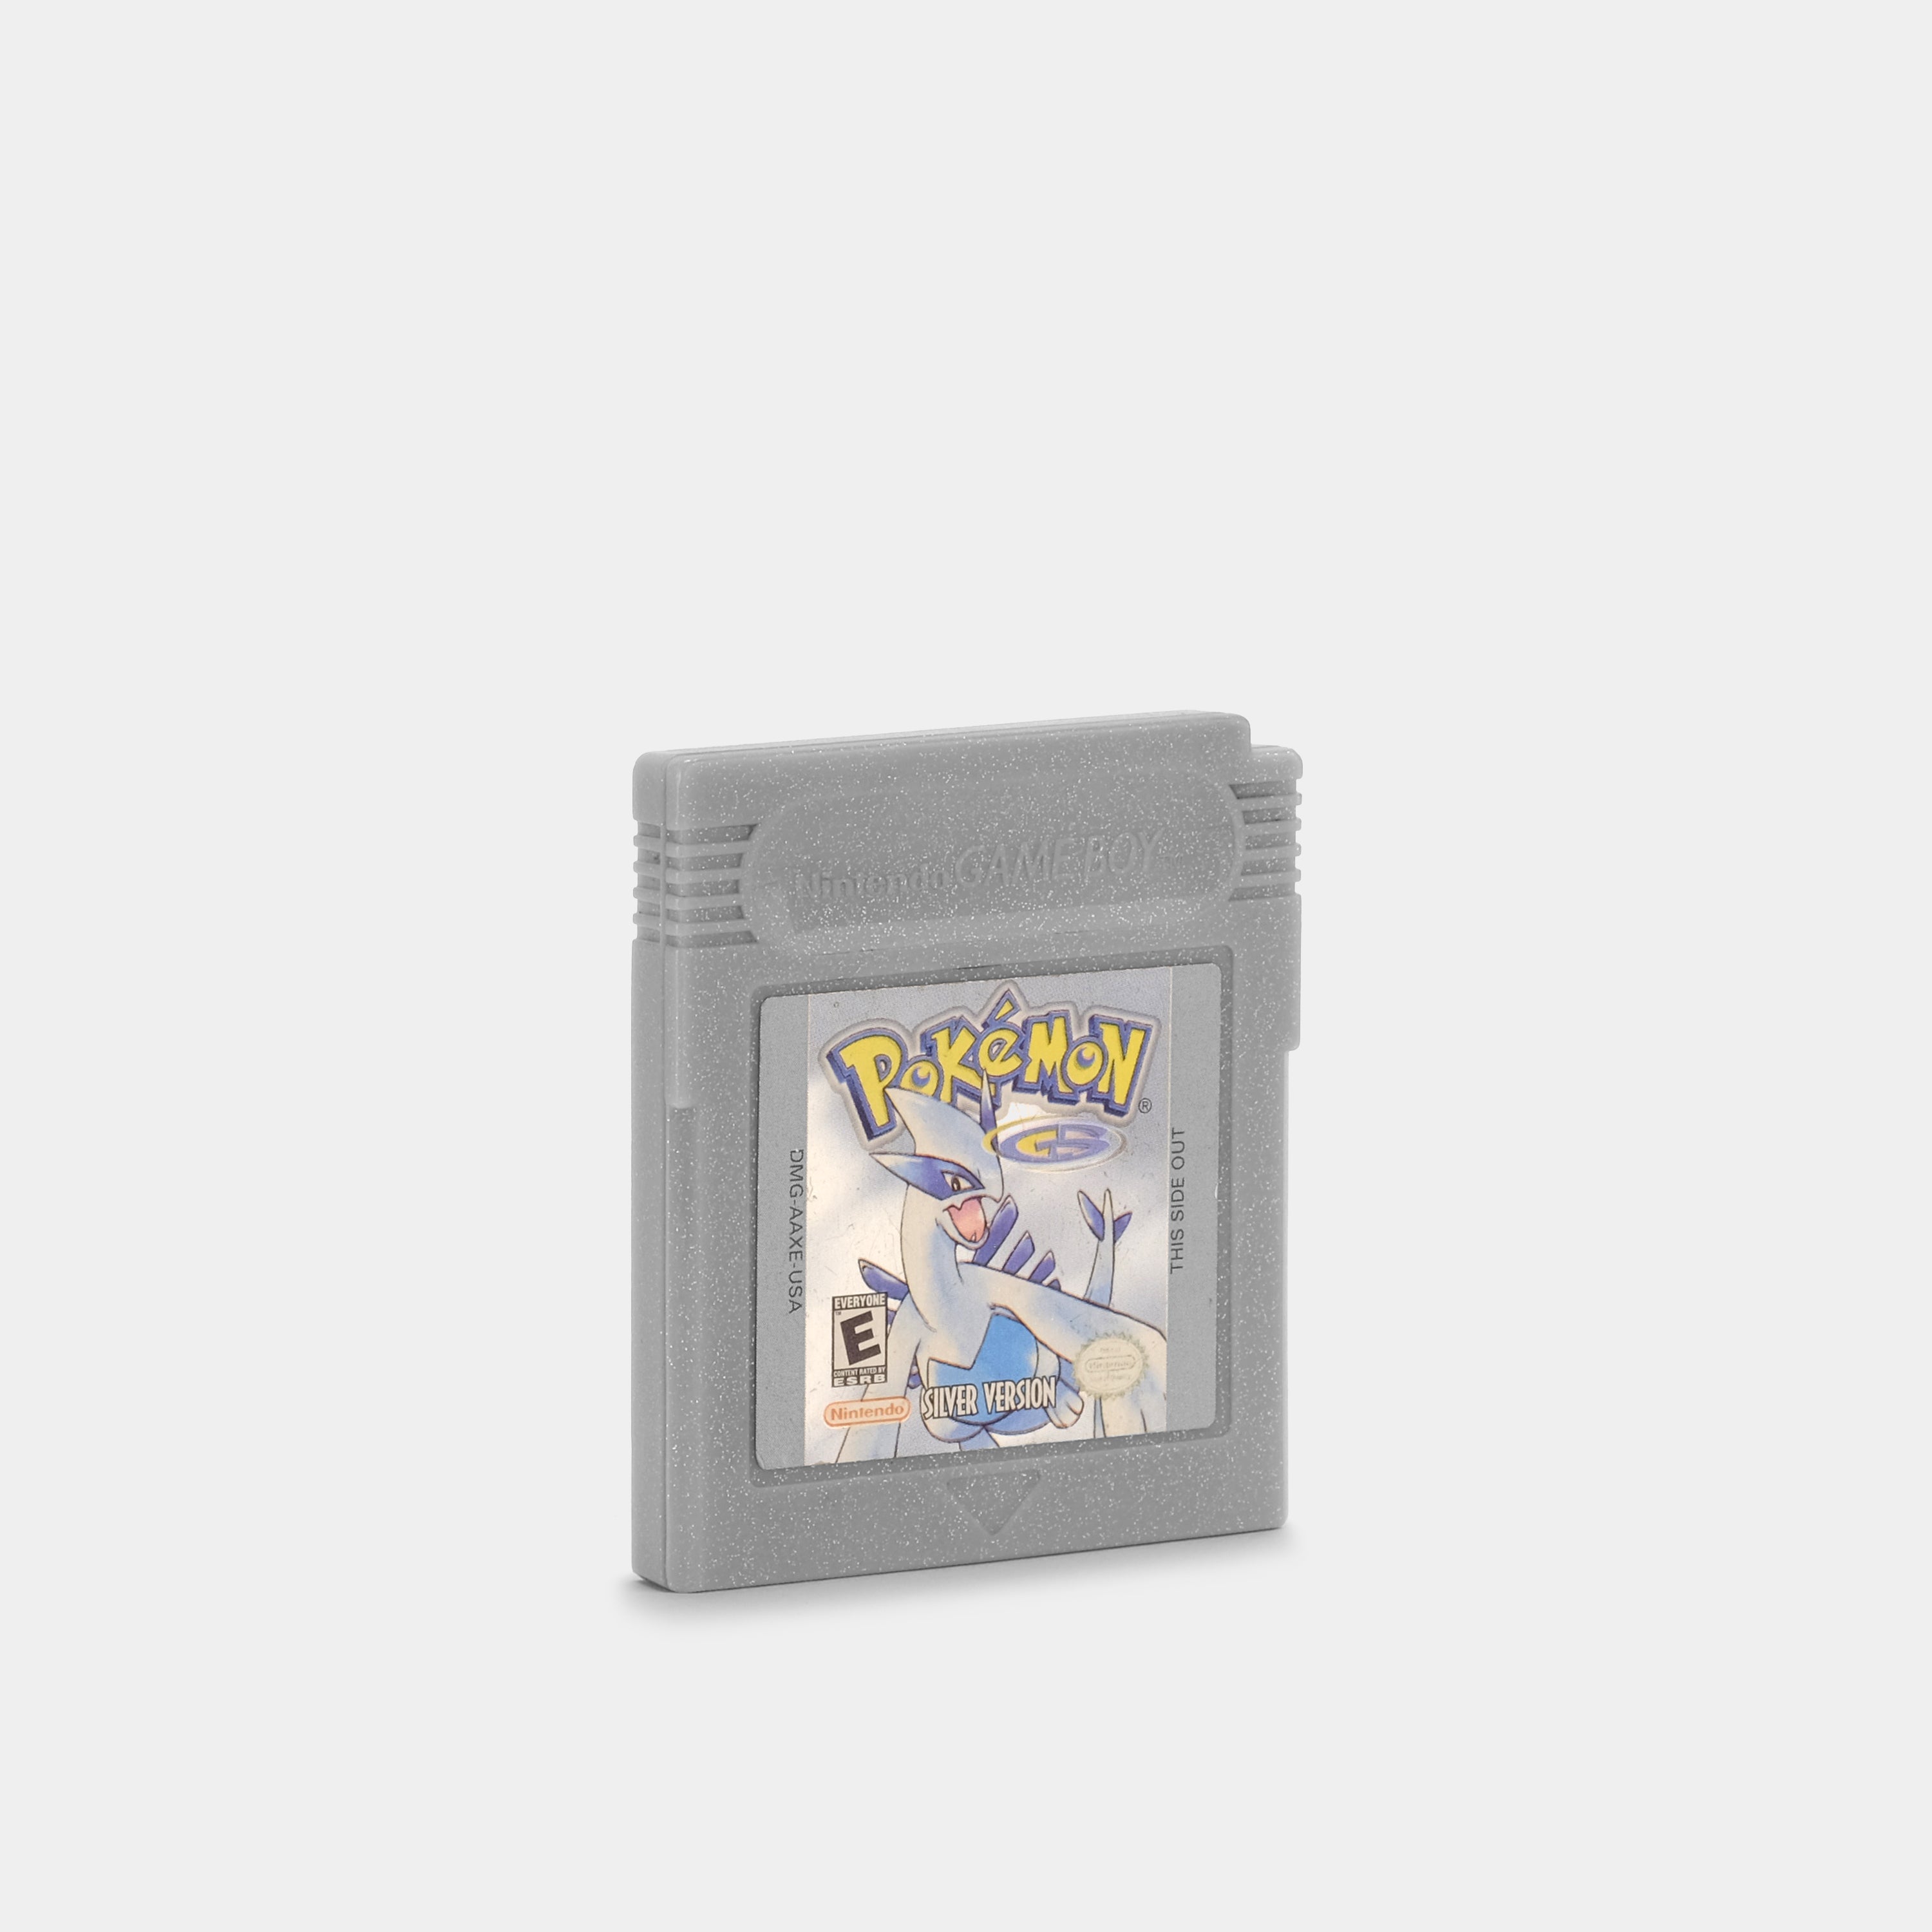 Pokémon Silver Version, Game Boy Color, Games